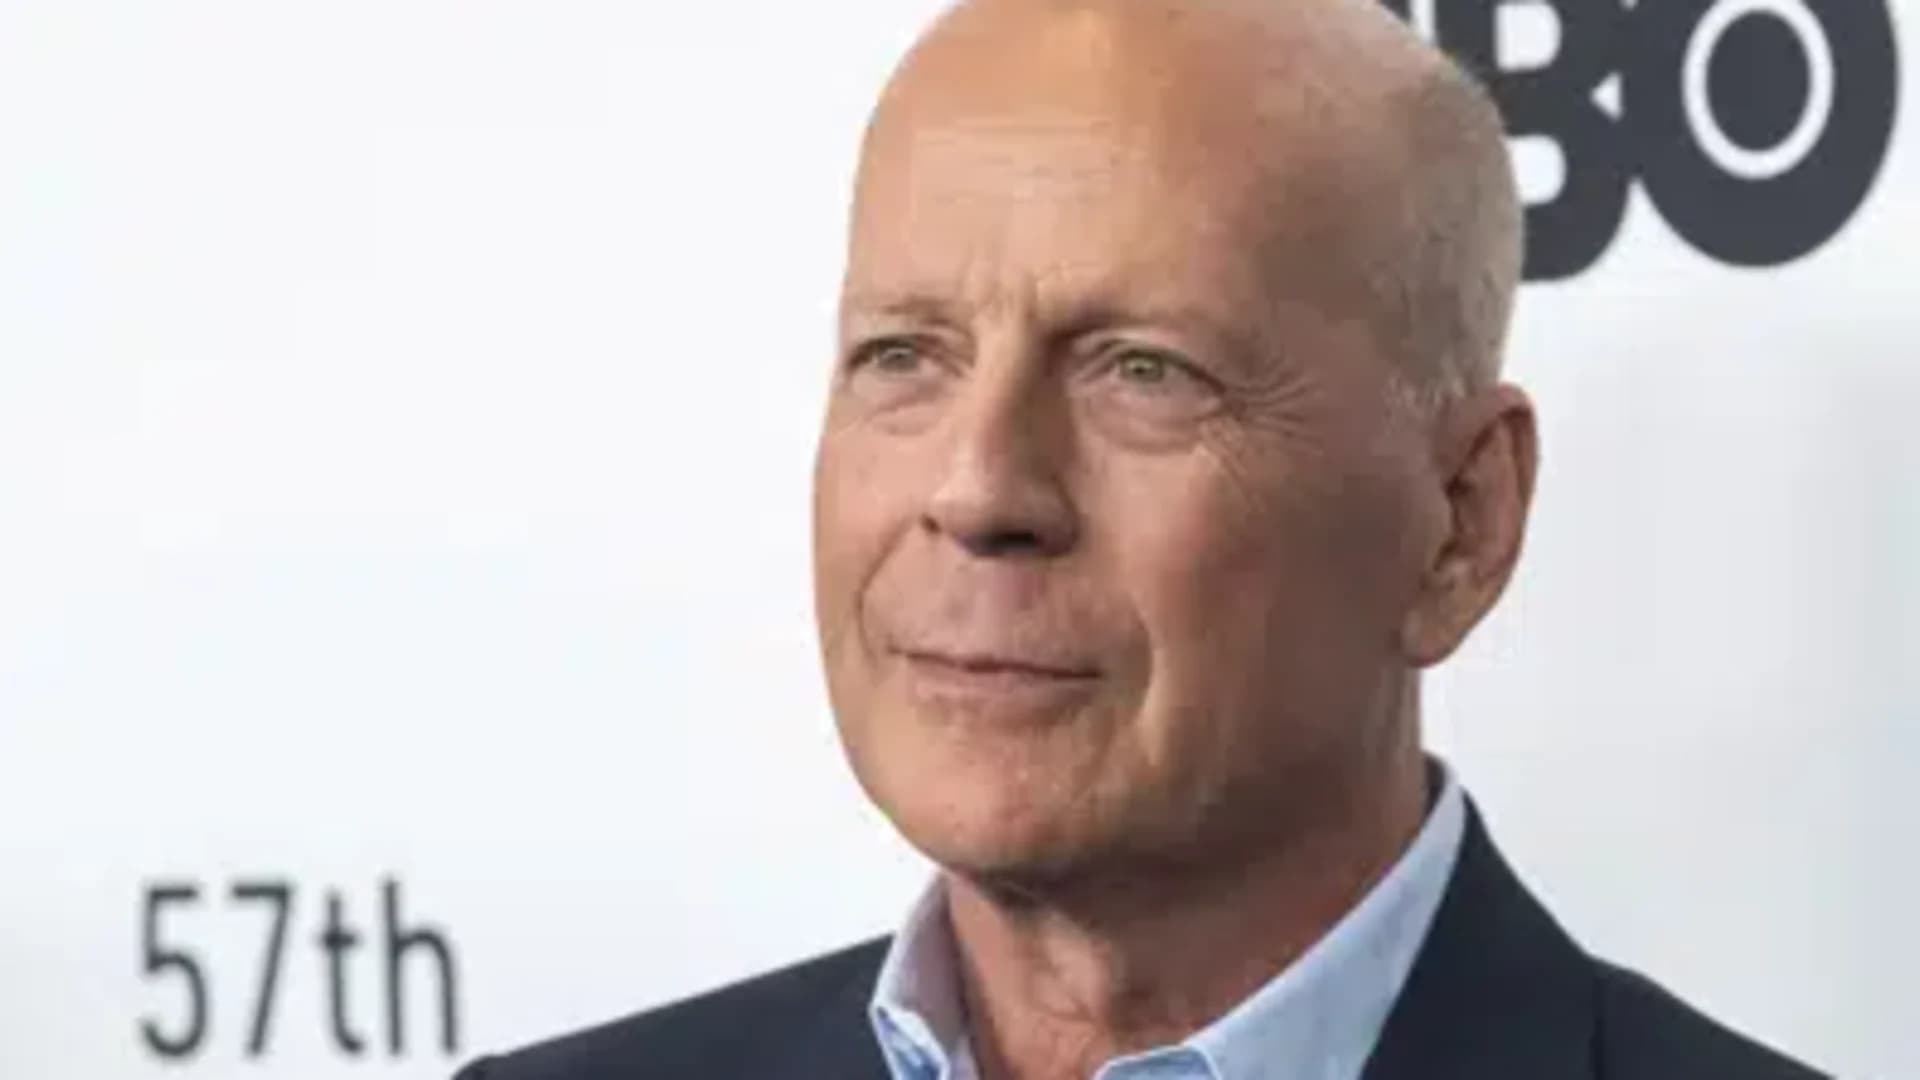 Bruce Willis has frontotemporal dementia, condition worsens